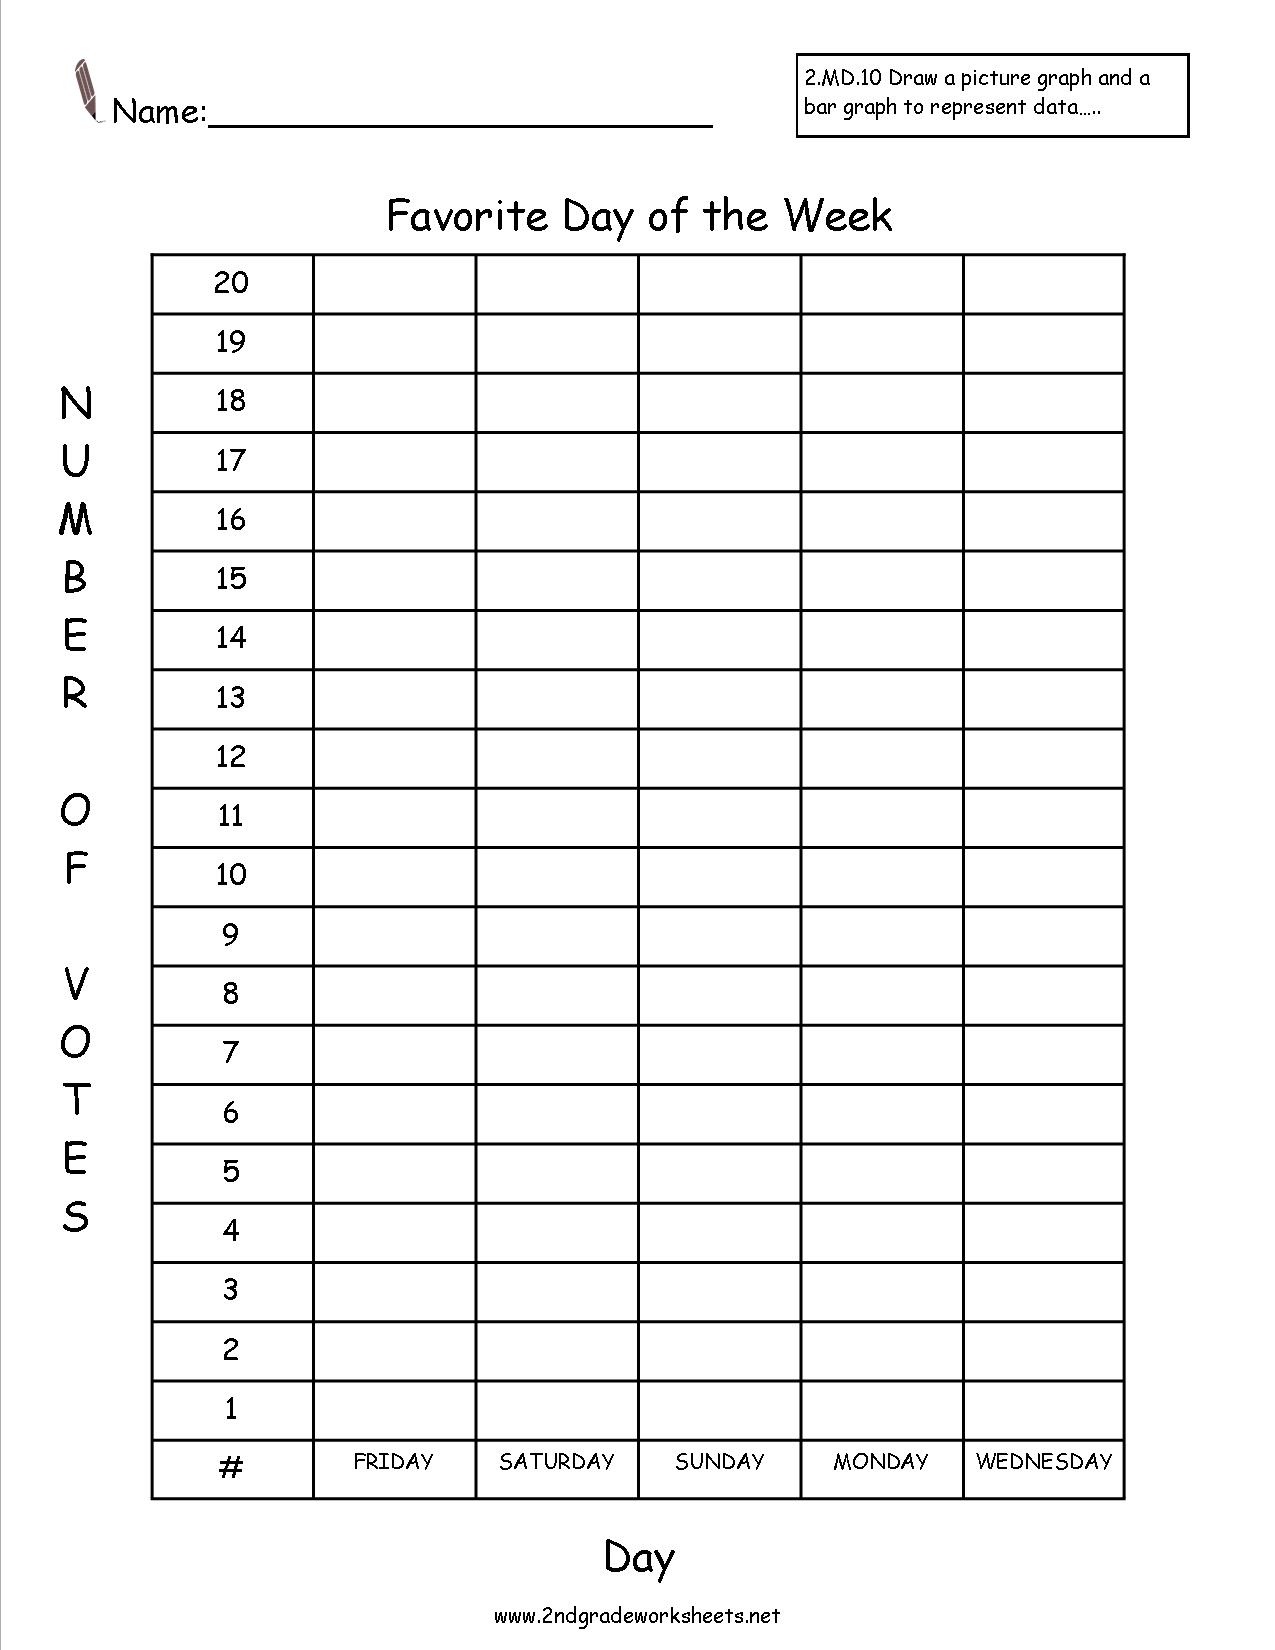 Free Reading And Creating Bar Graph Worksheets - Free Printable Blank Bar Graph Worksheets